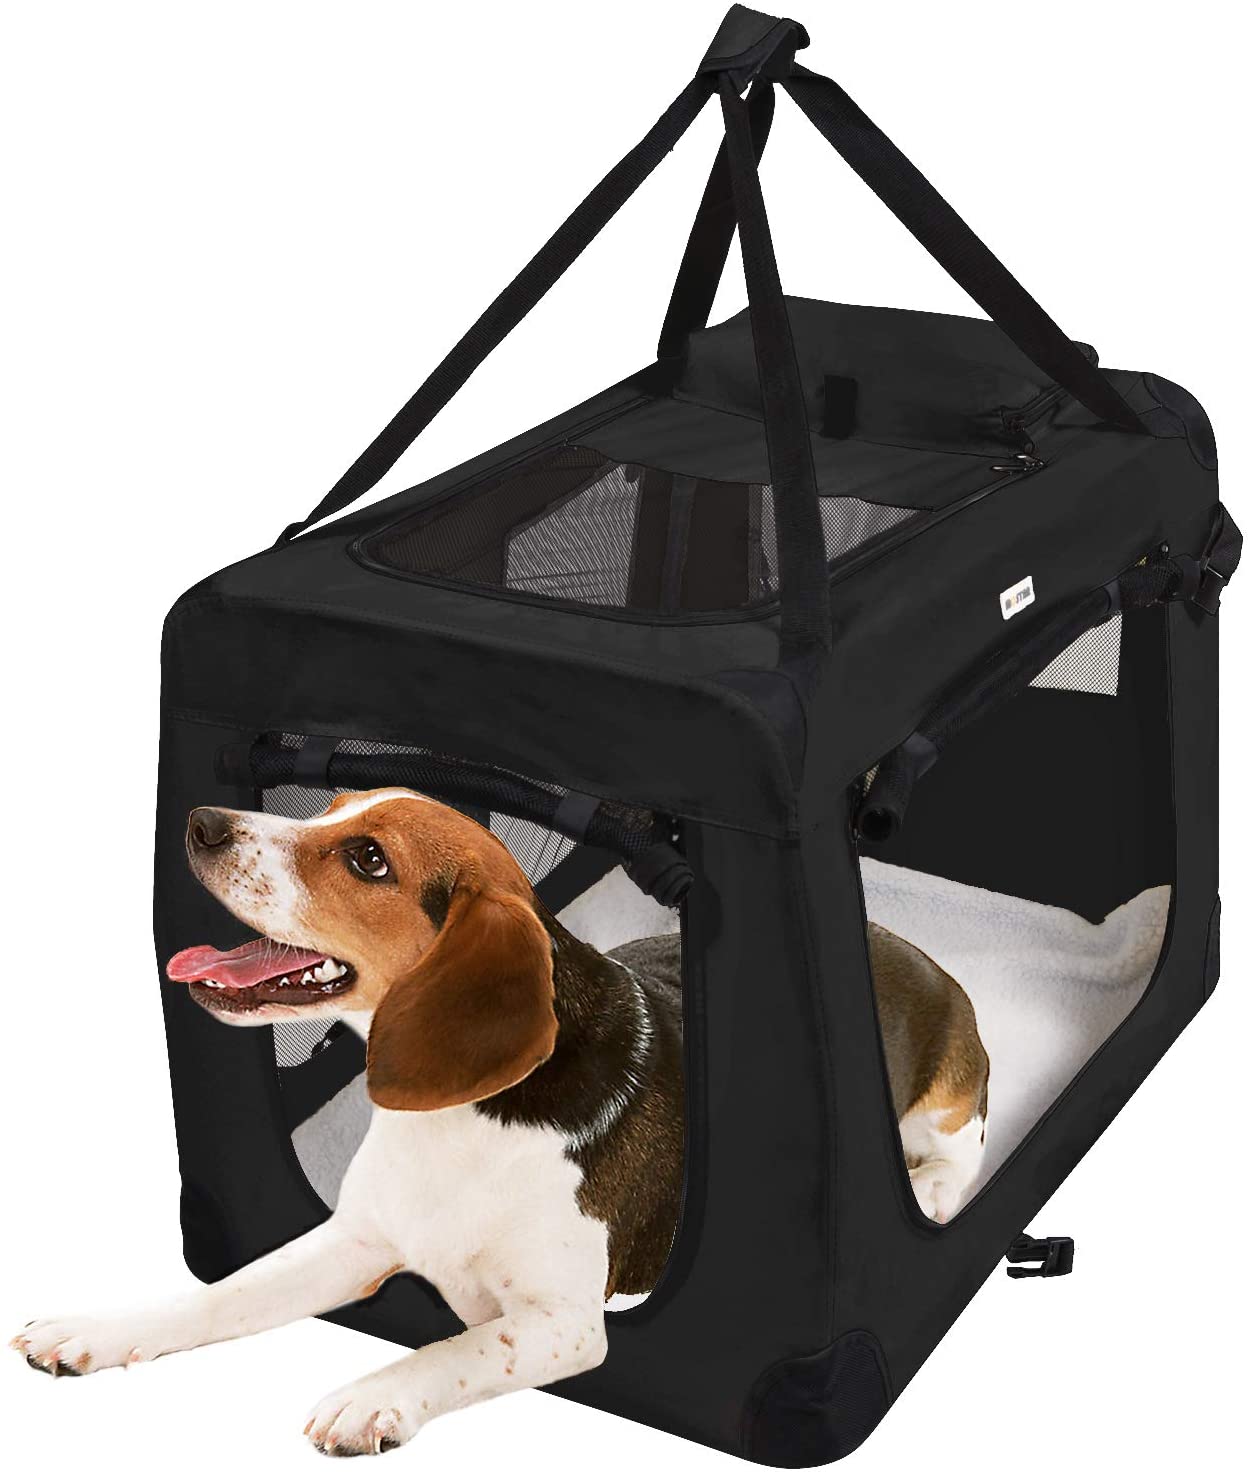  Mc Star Almohadas plegables lavables para perros Contenedores de transporte Perro Gato Animal doméstico Oxford con almohada Cordero Negro L 